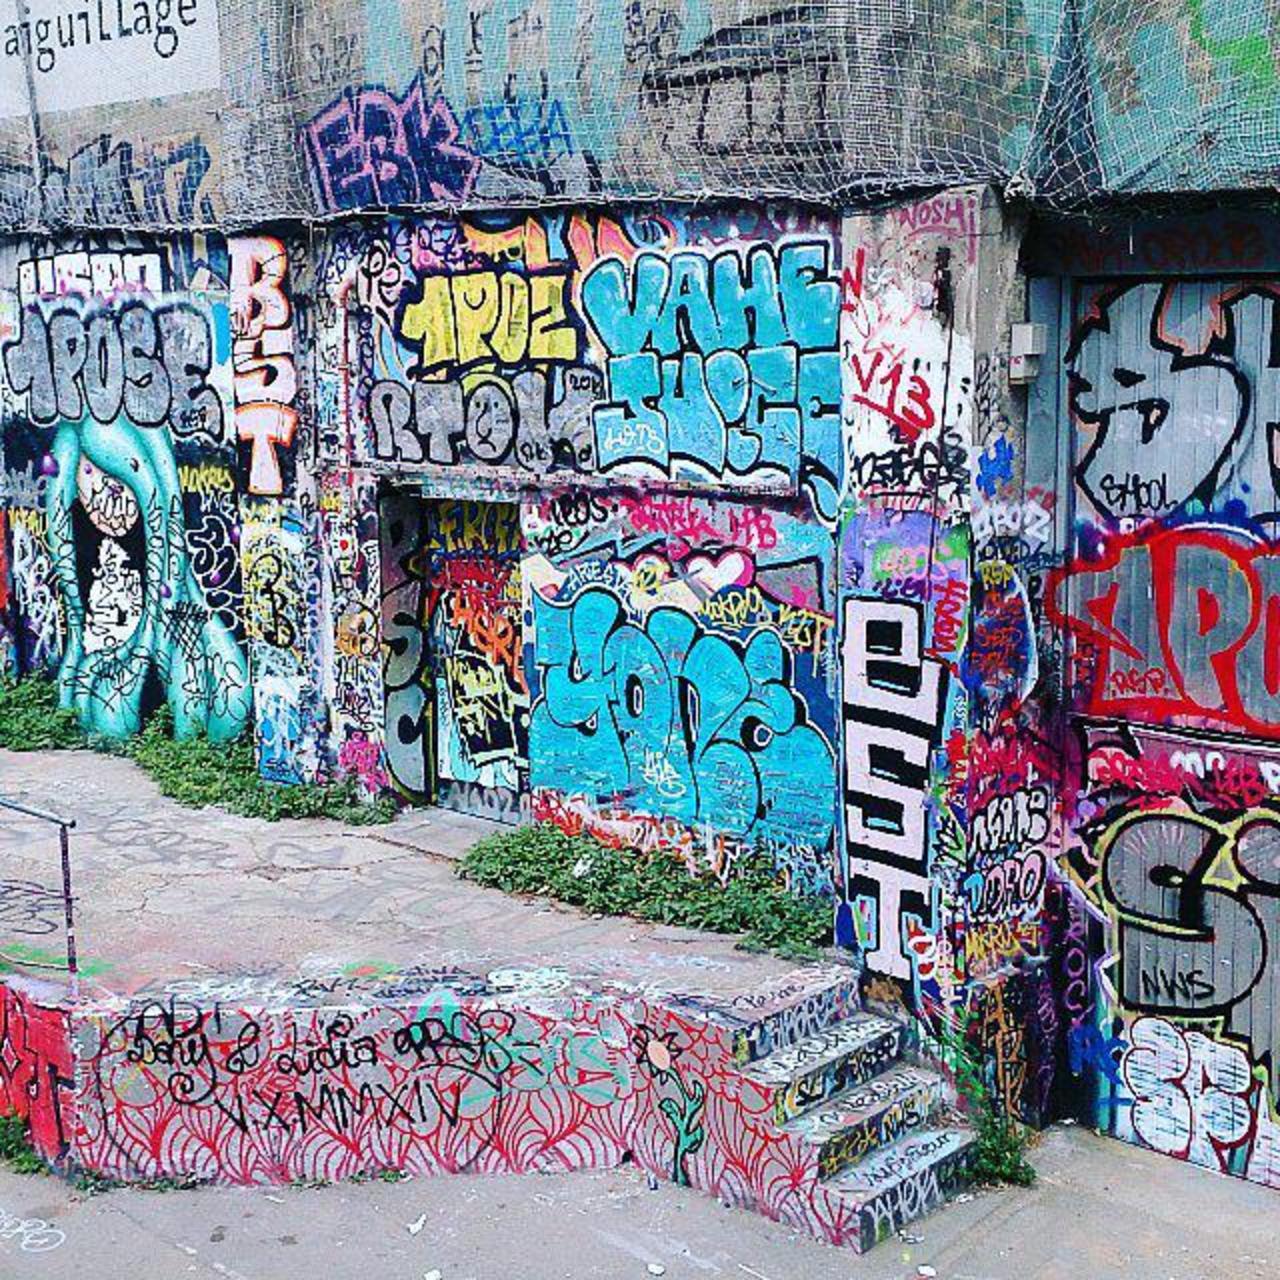  #graffiti #streetart #street #art #paris http://ift.tt/1jec66Q http://t.co/hspcjlWY6m